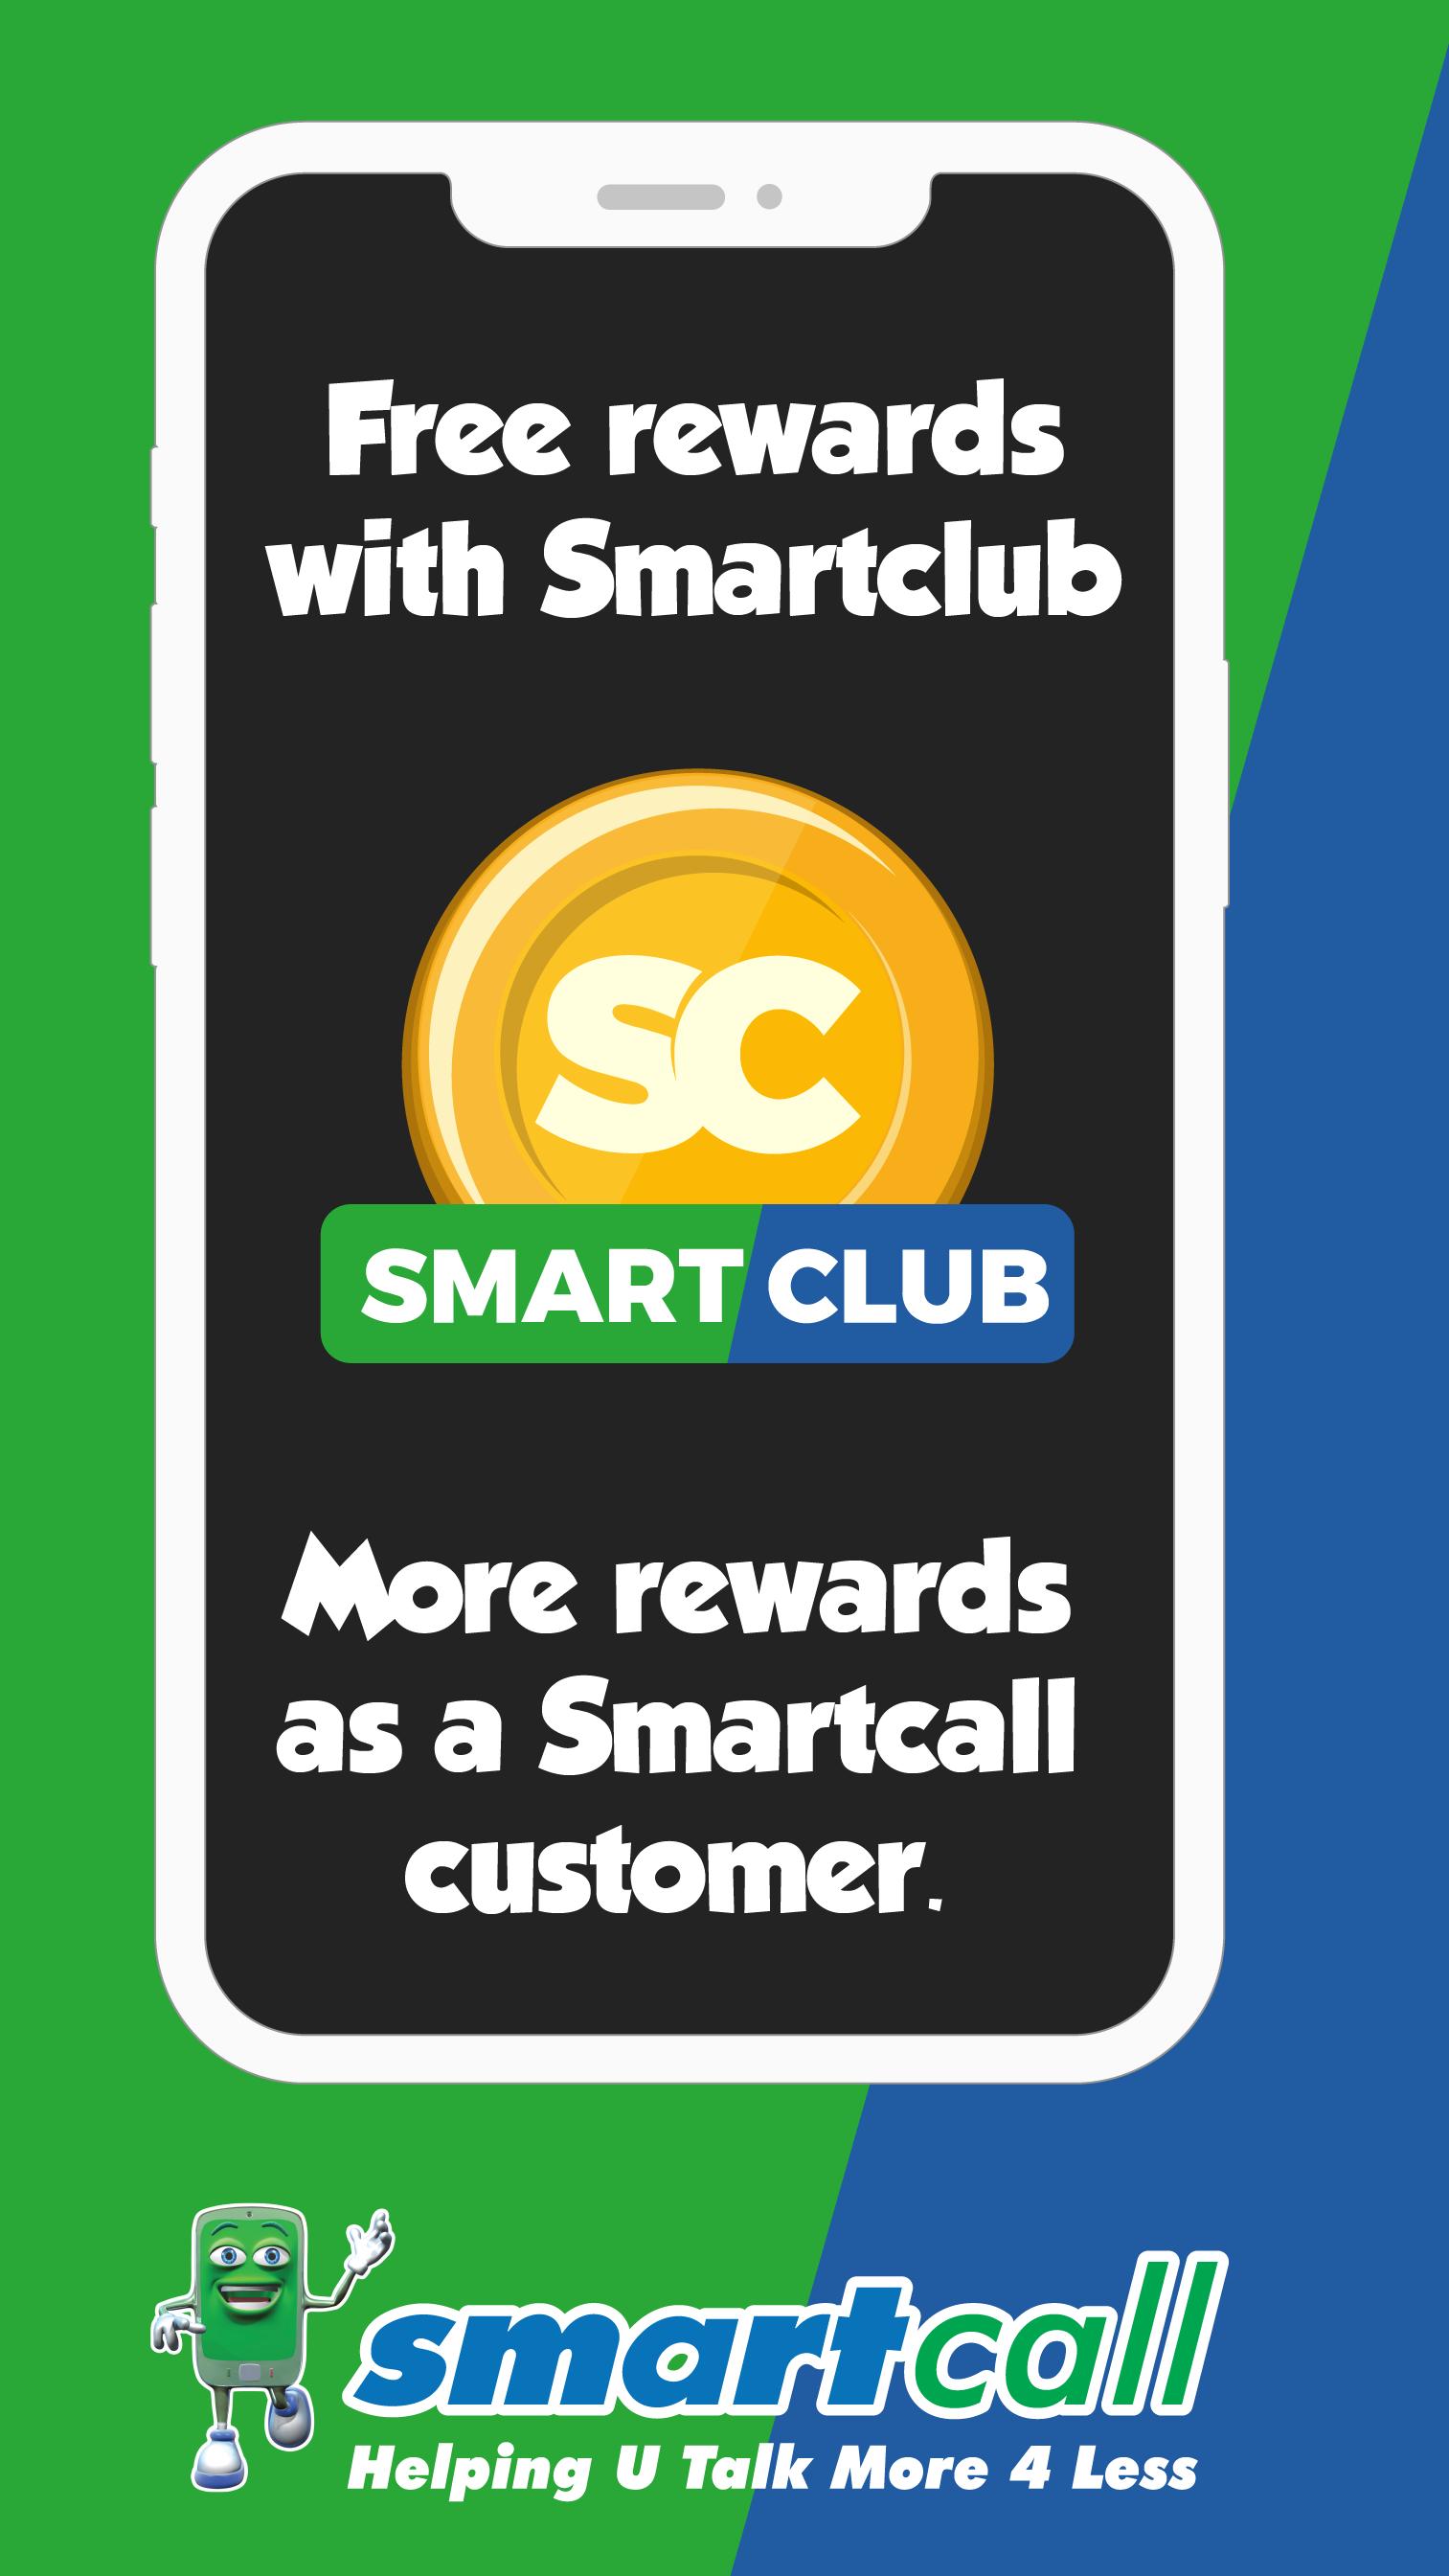 club Smart APK (Android App) - Baixar Grátis